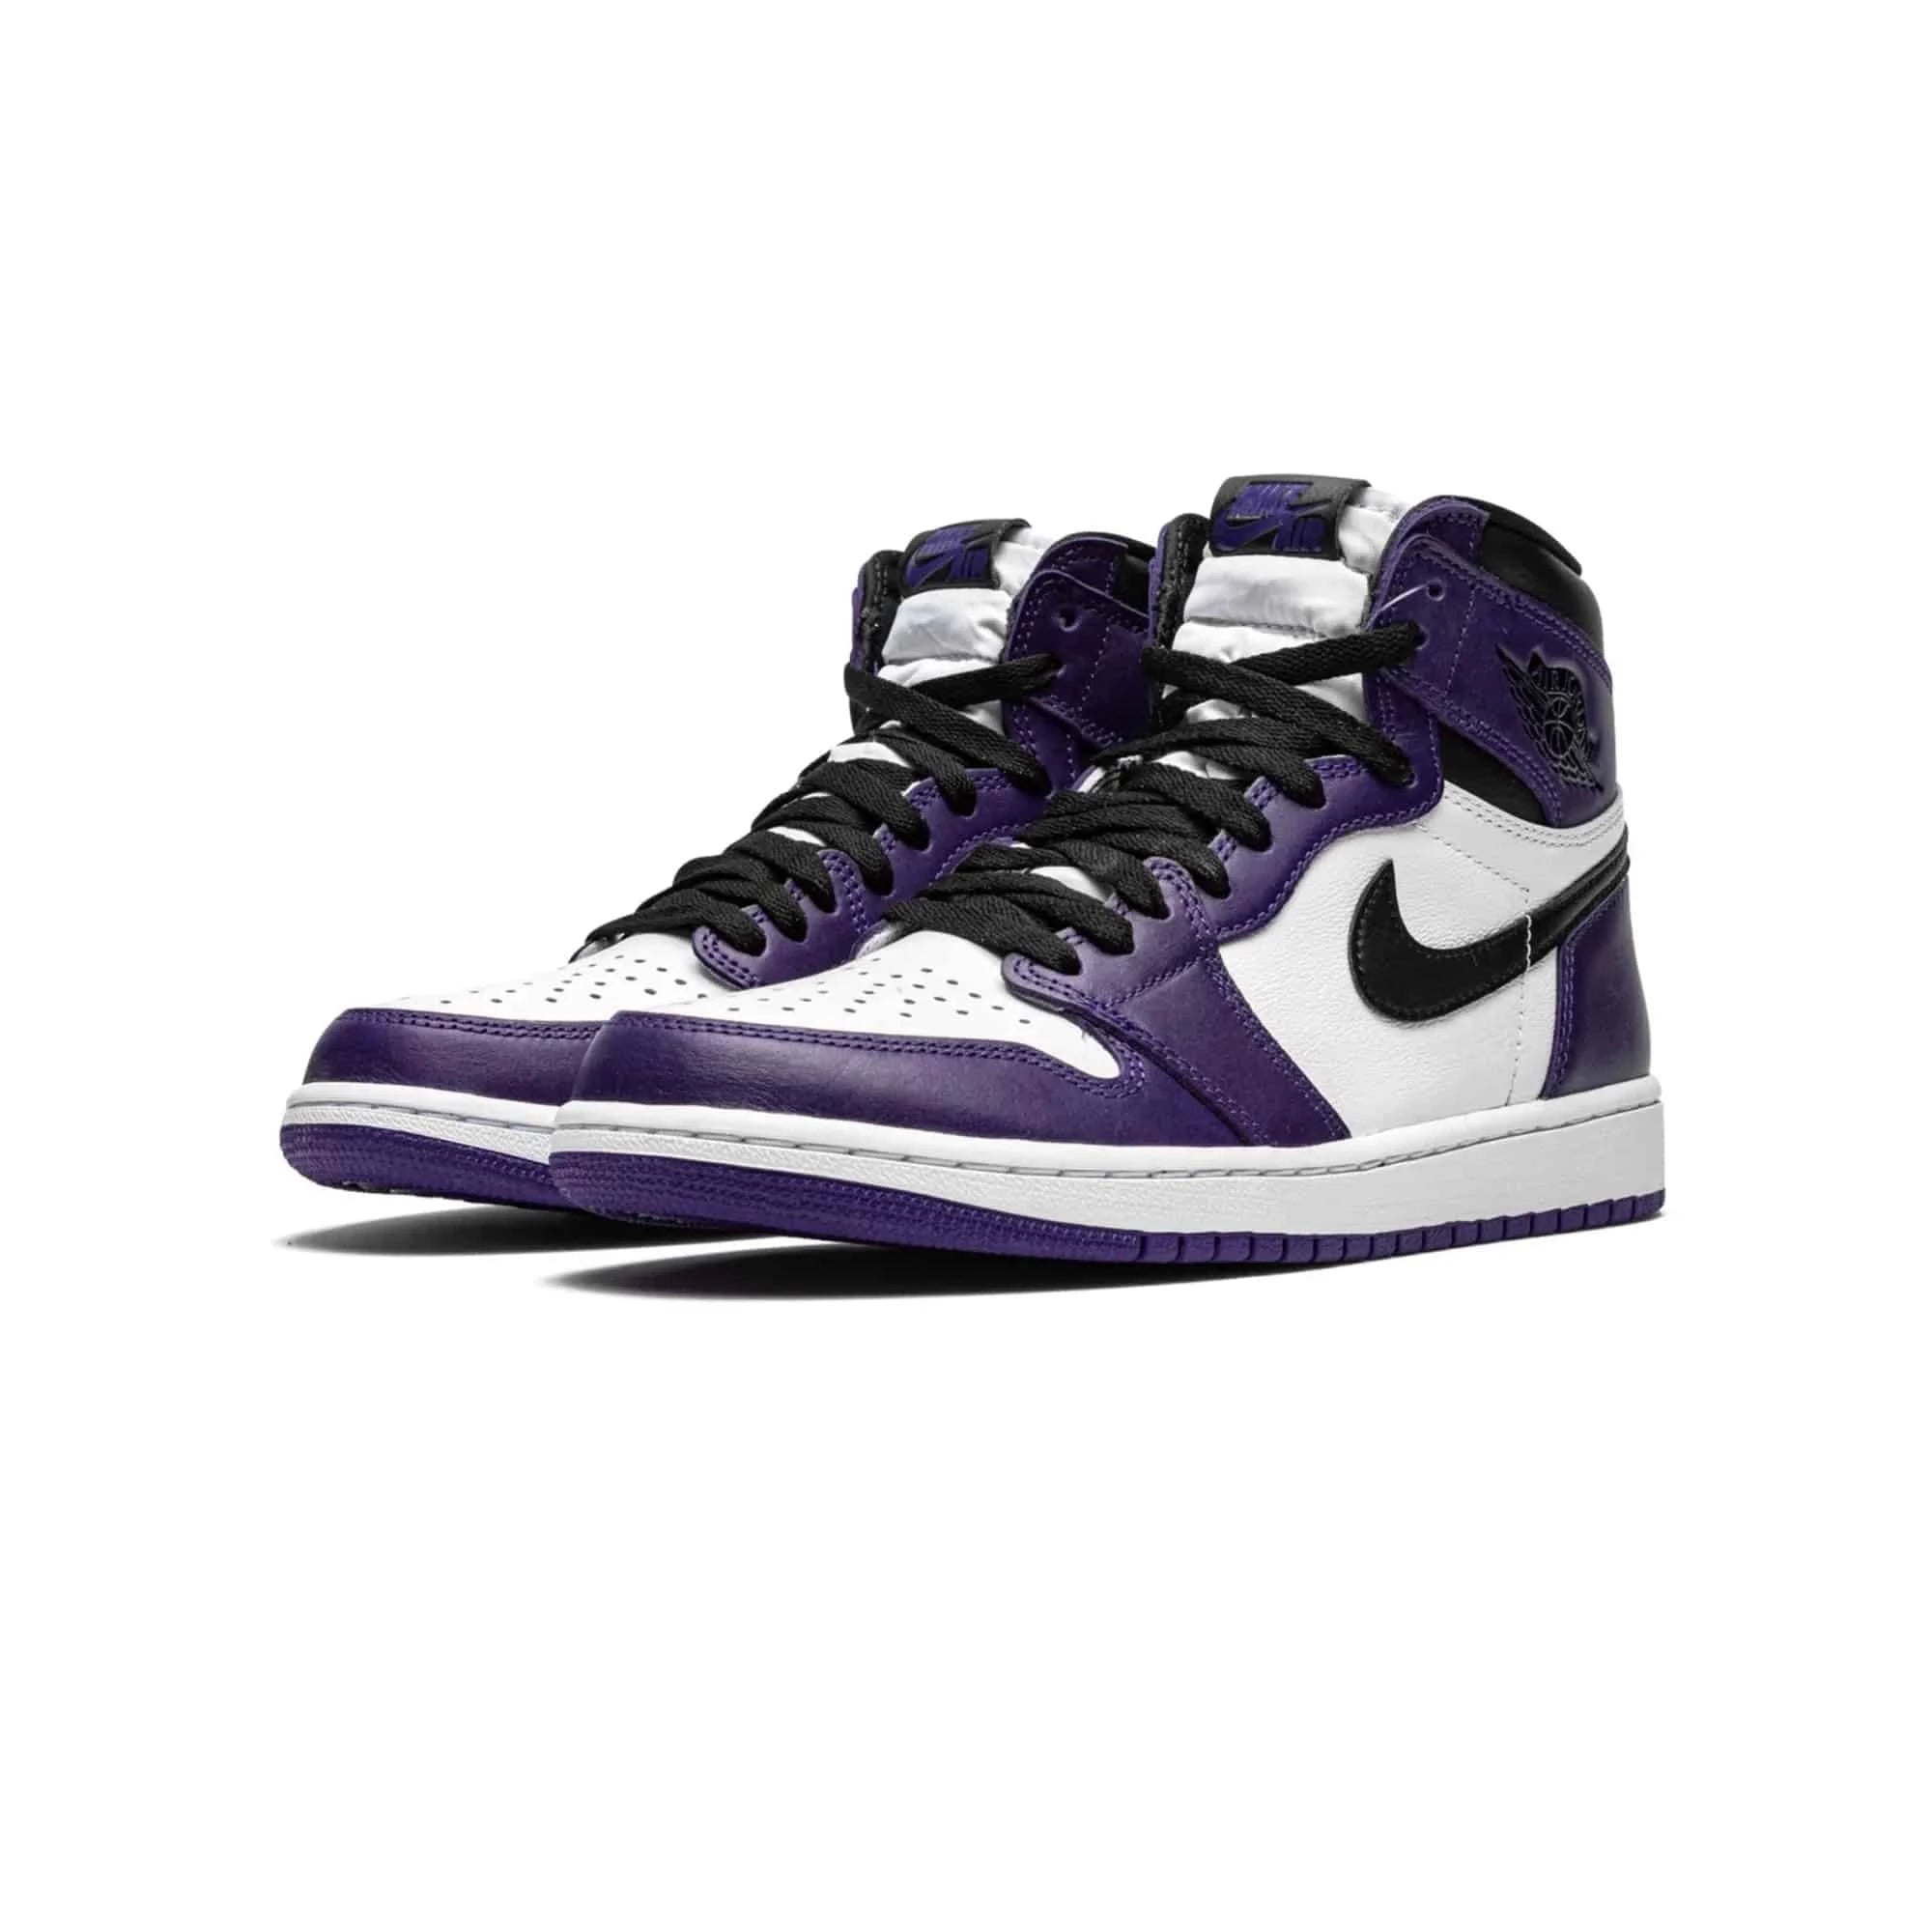 Jordan 1 OG High Court Purple W for sale